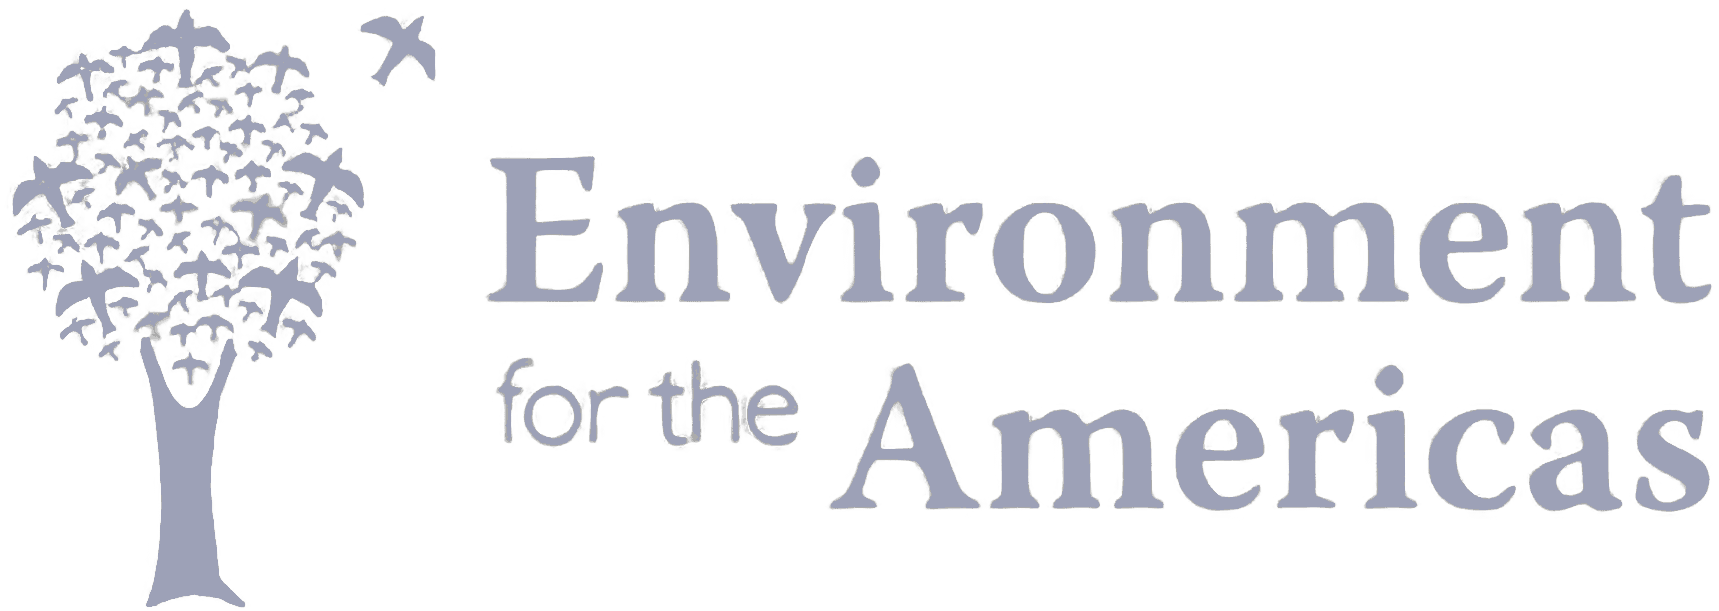 Environment for the america logo